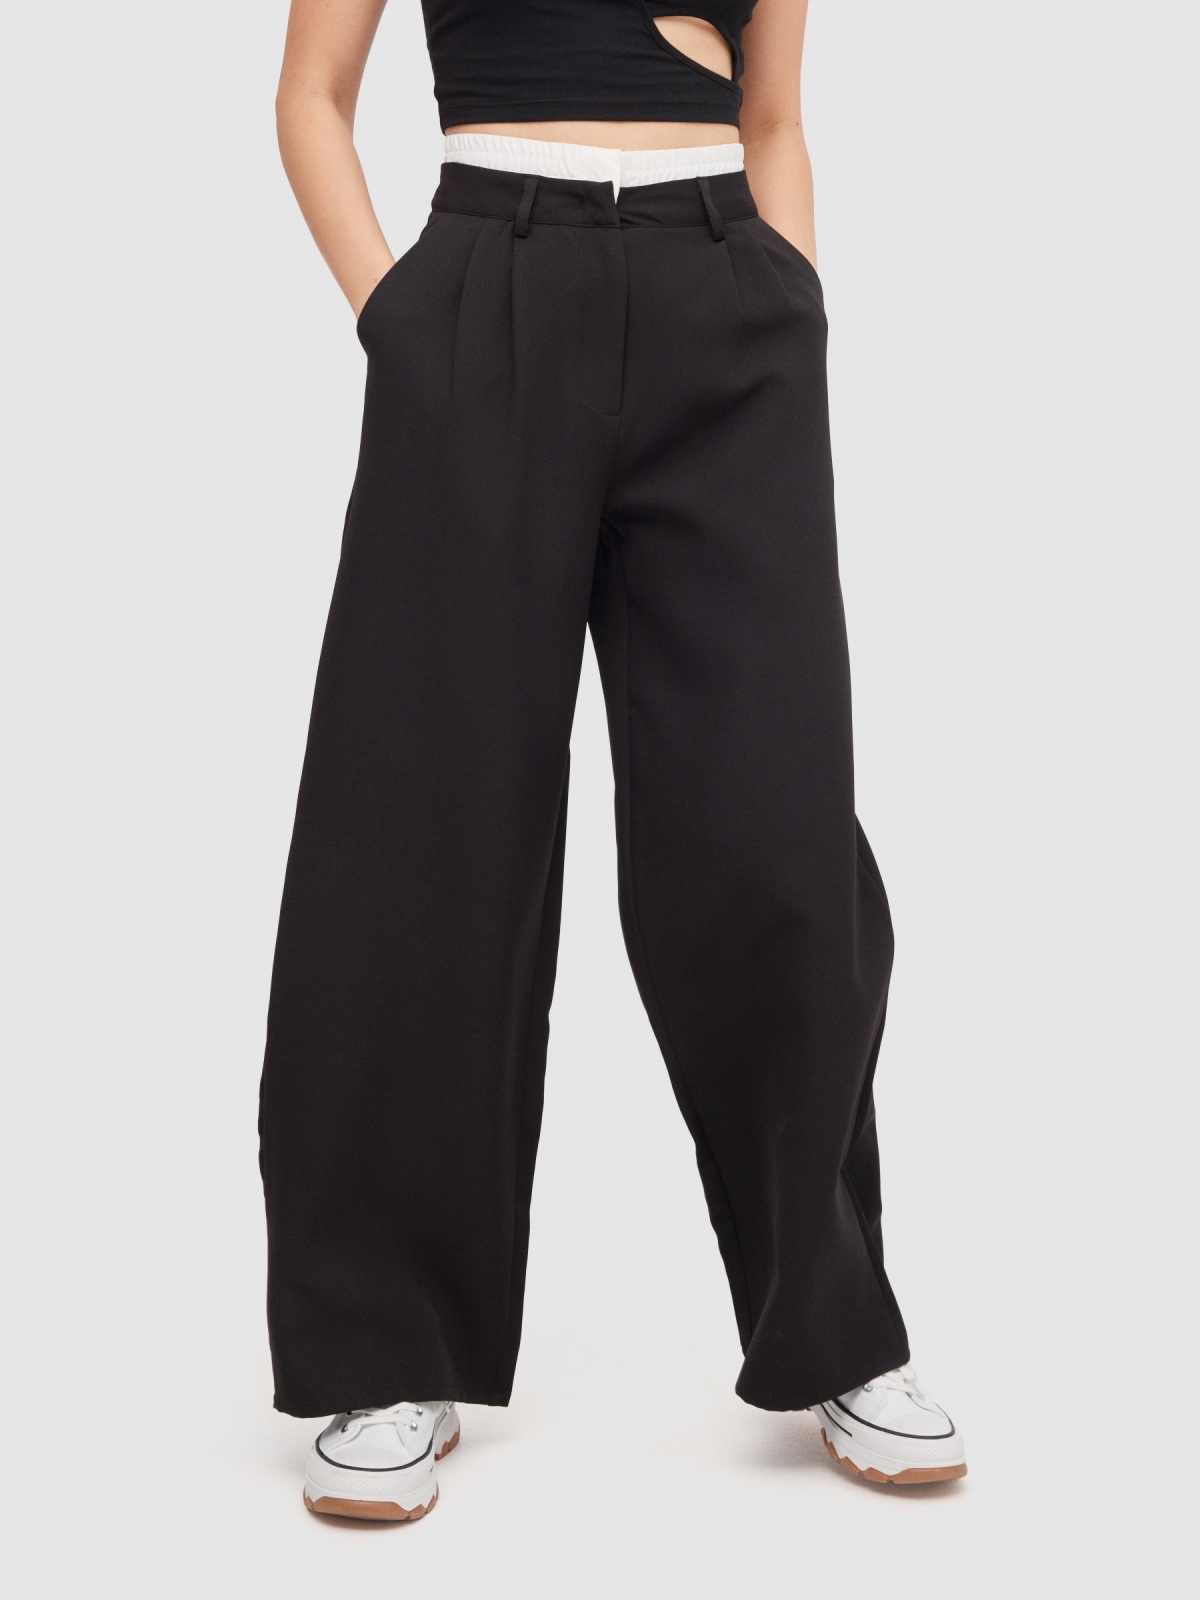 Pantalón tailoring cinturilla rizada negro vista media frontal